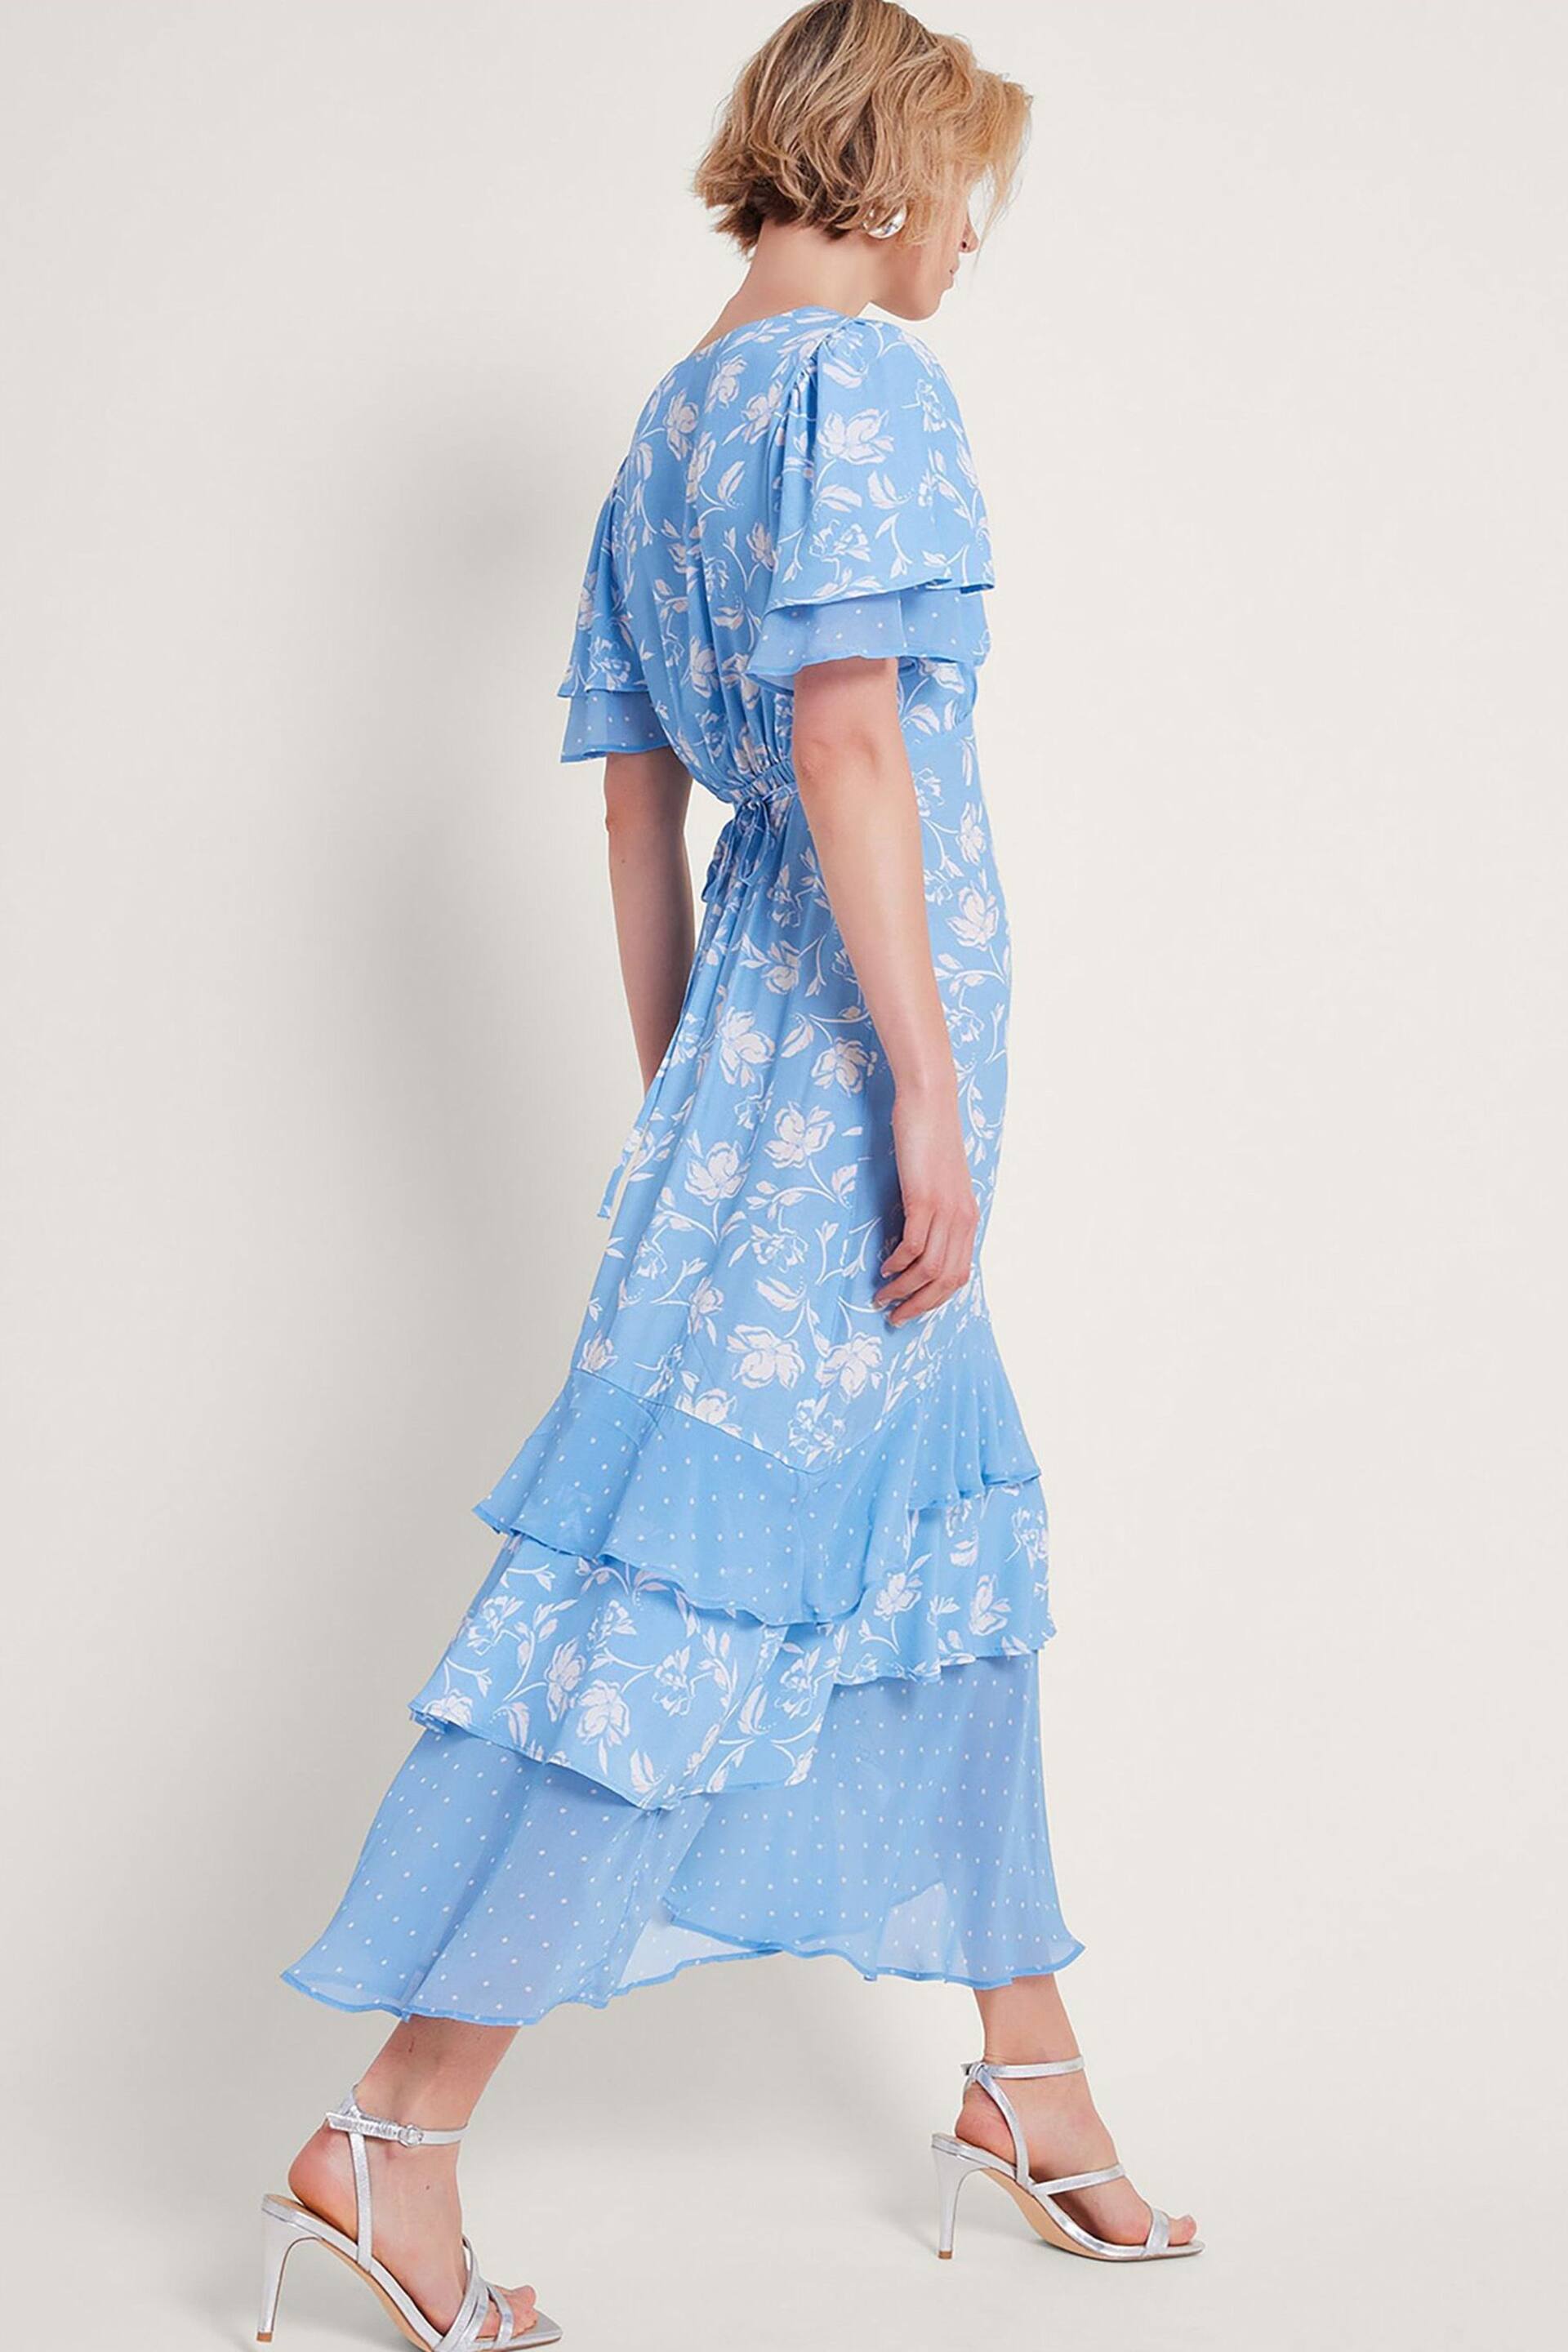 Monsoon Blue Simone Tiered Dress - Image 4 of 5